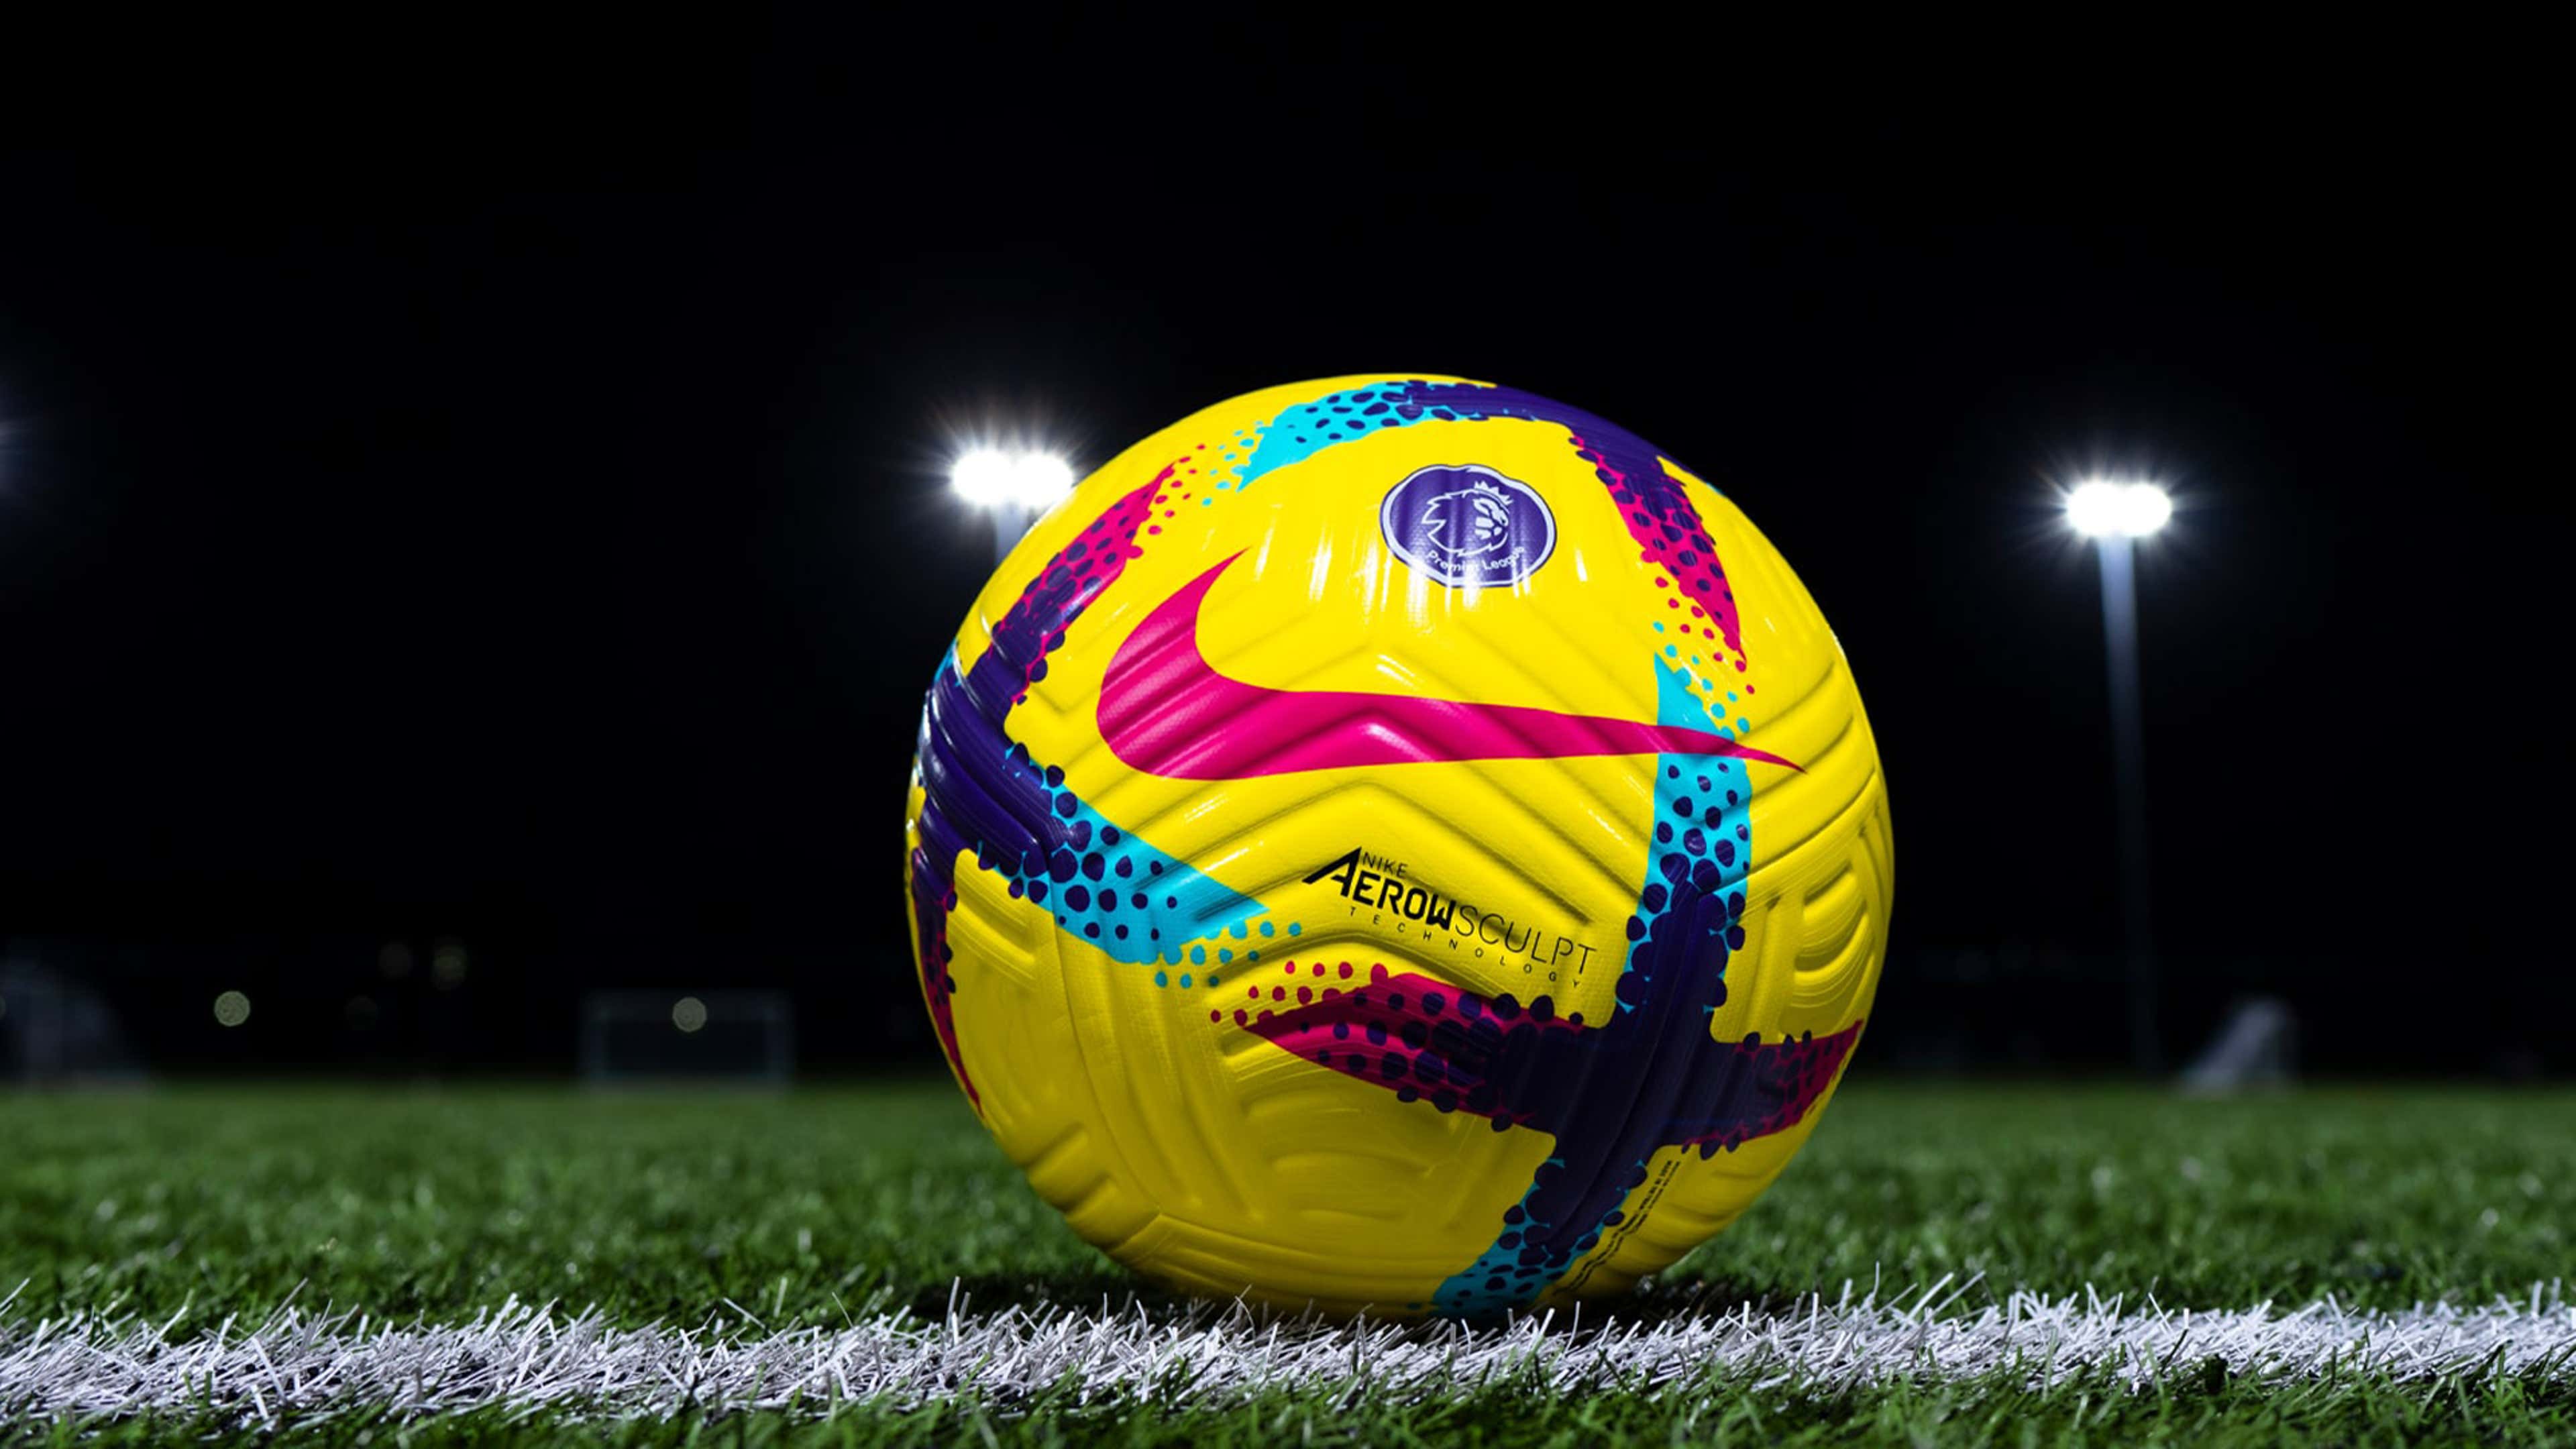 Nova bola Nike Hi-Vis Winter Premier League - Blogs - Fútbol Emotion